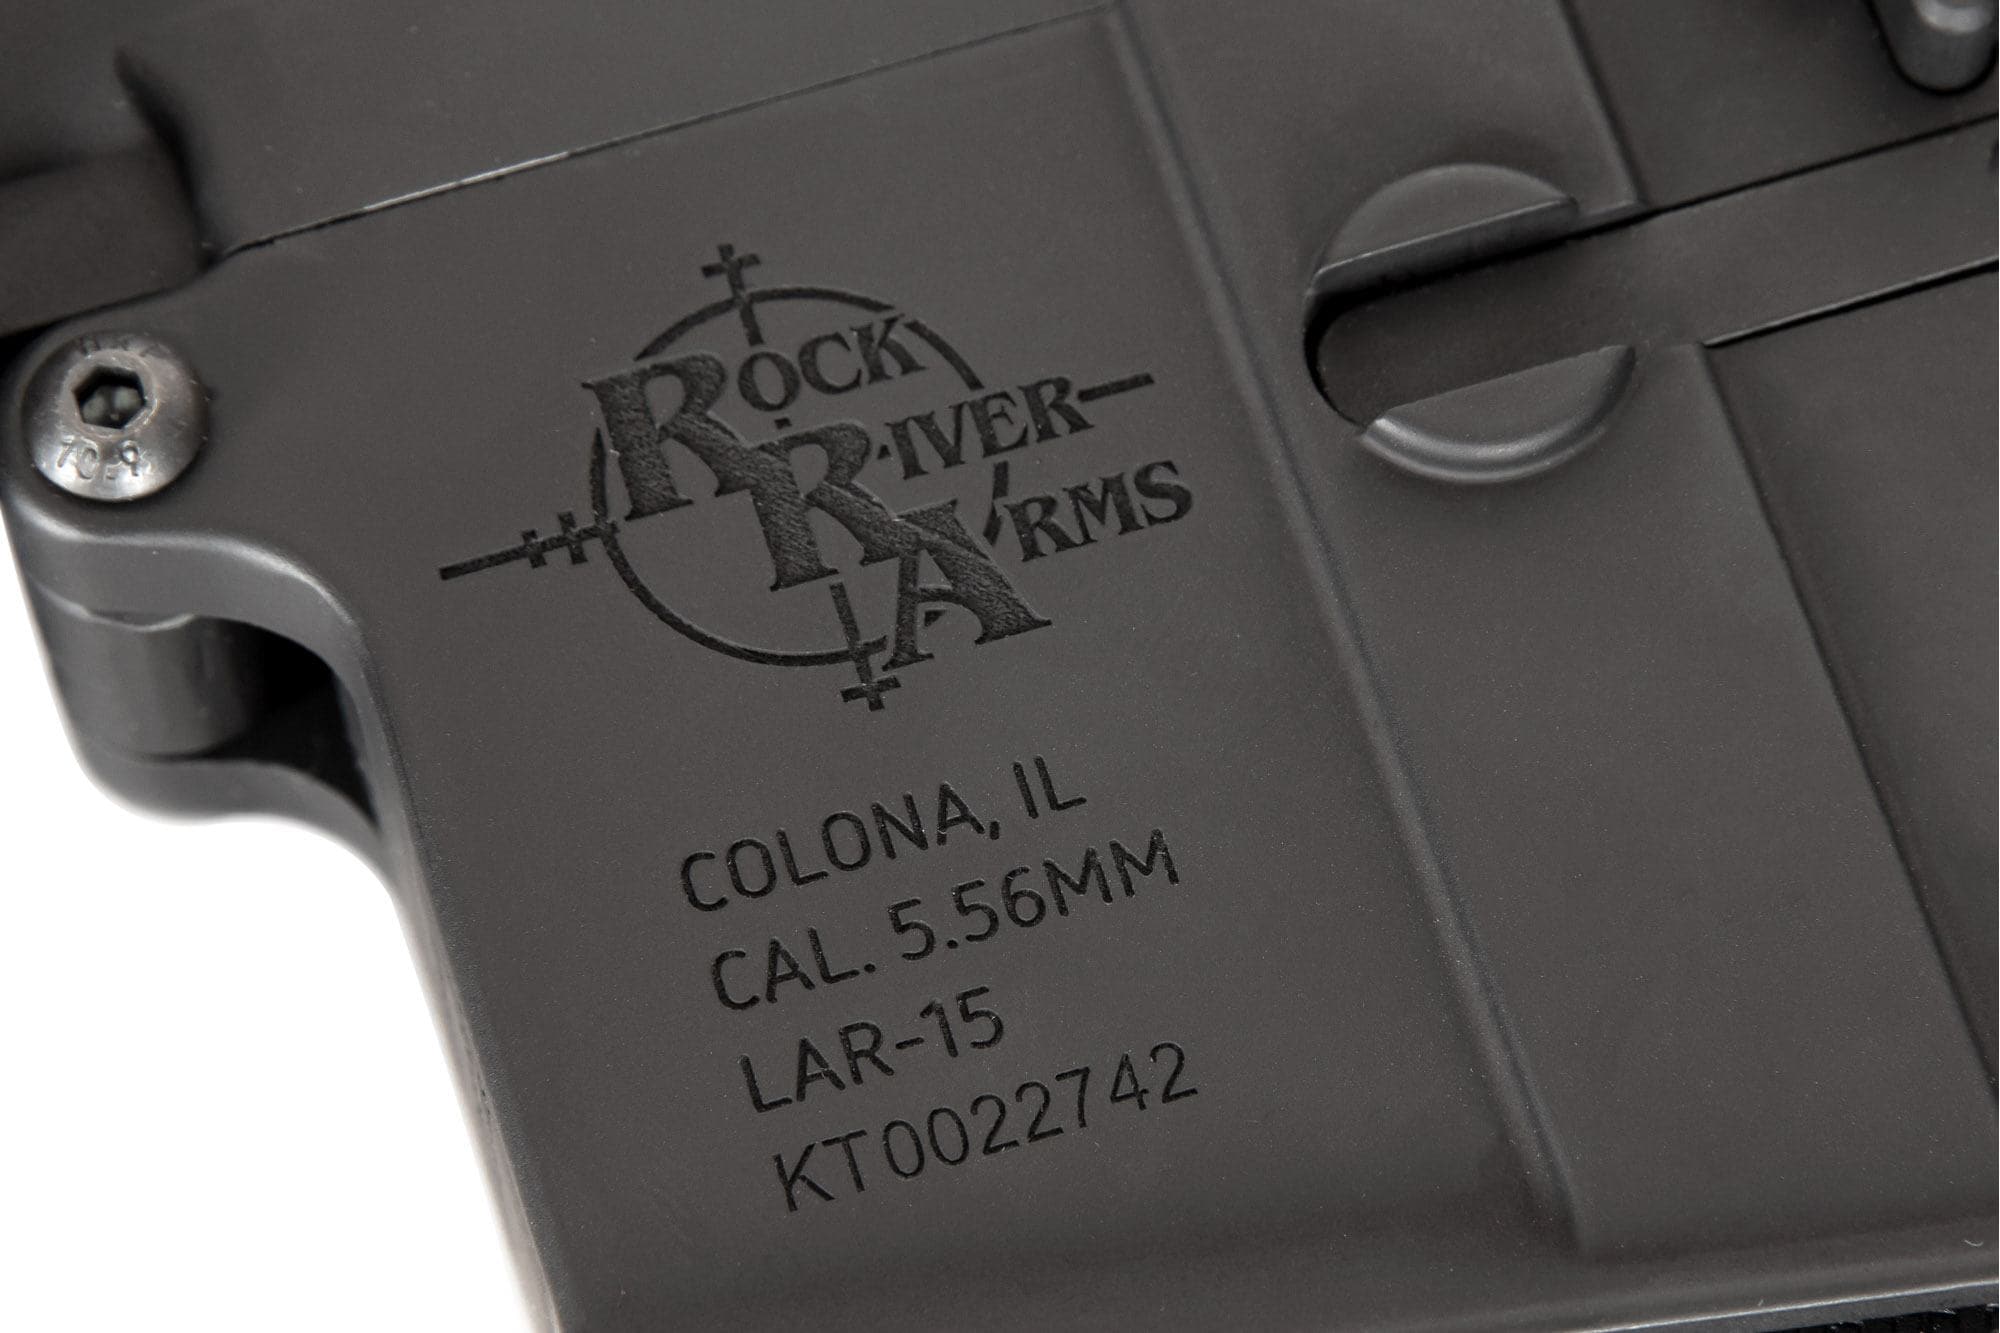 Штурмова гвинтівка AEG Specna Arms RRA SA-E01 Edge 2.0 - чорна